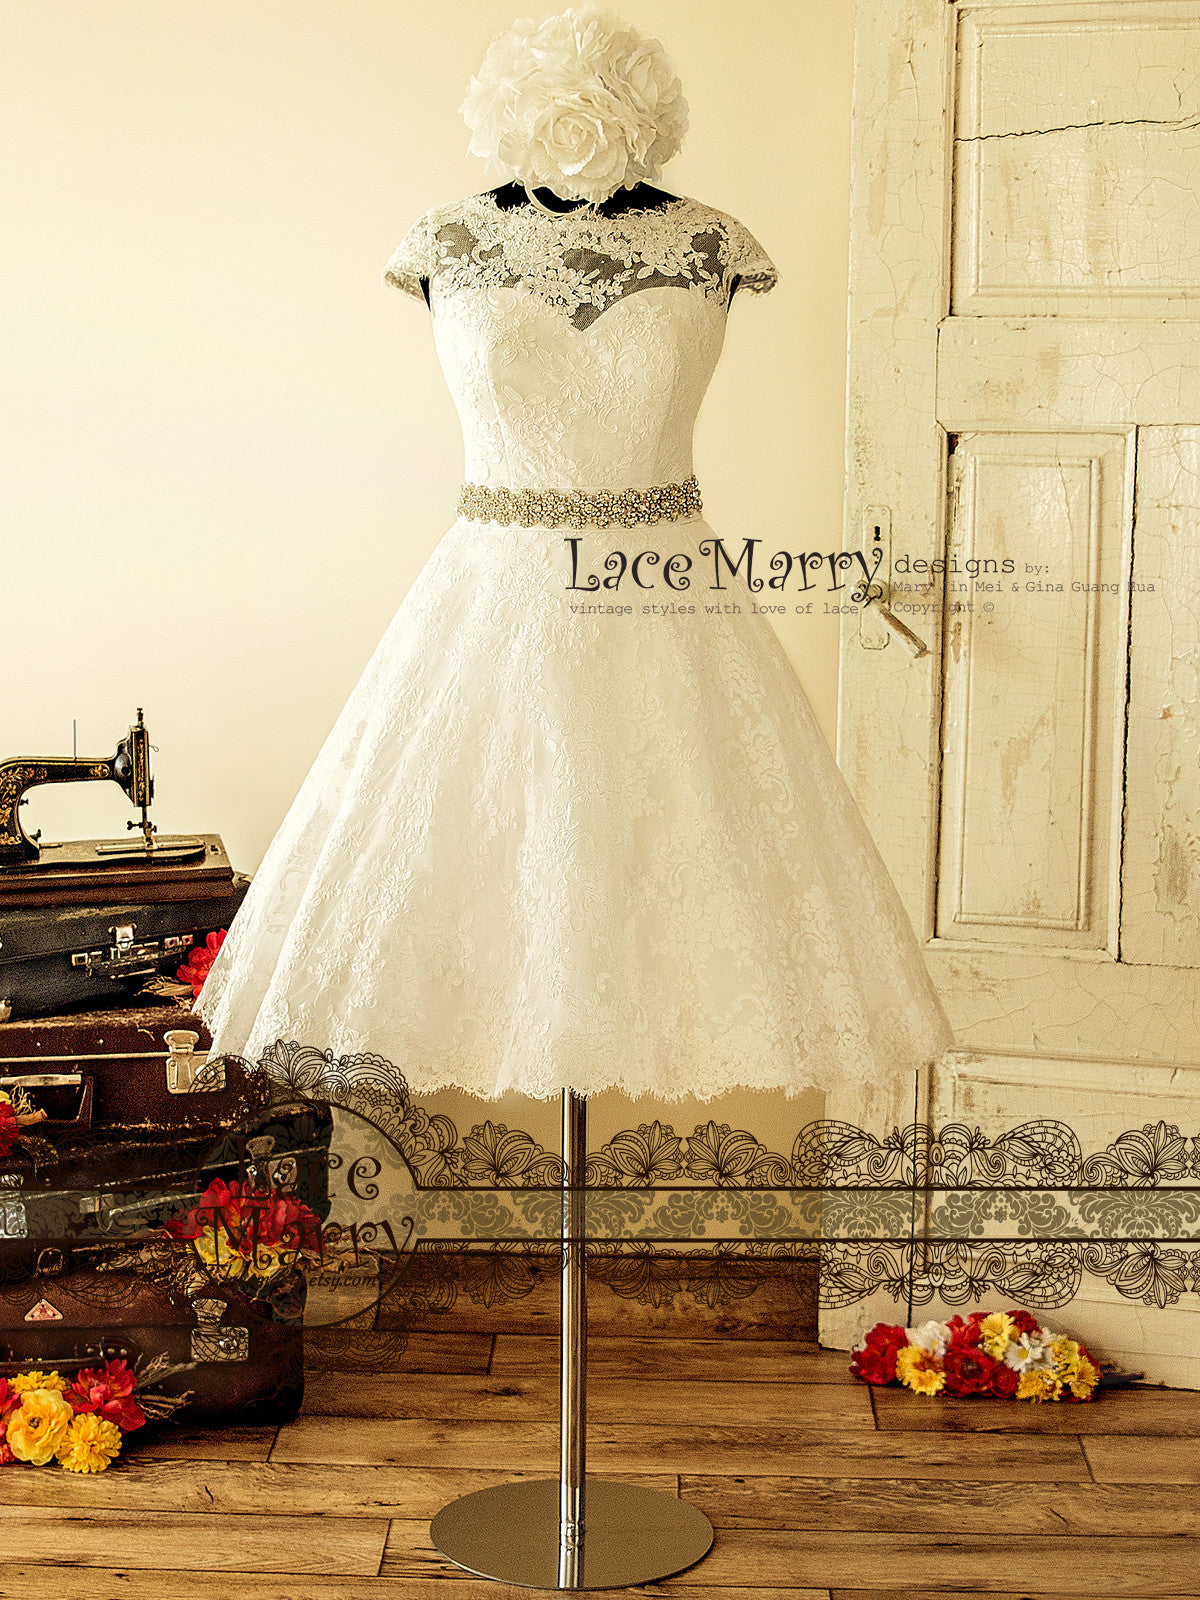 1950s style wedding dress